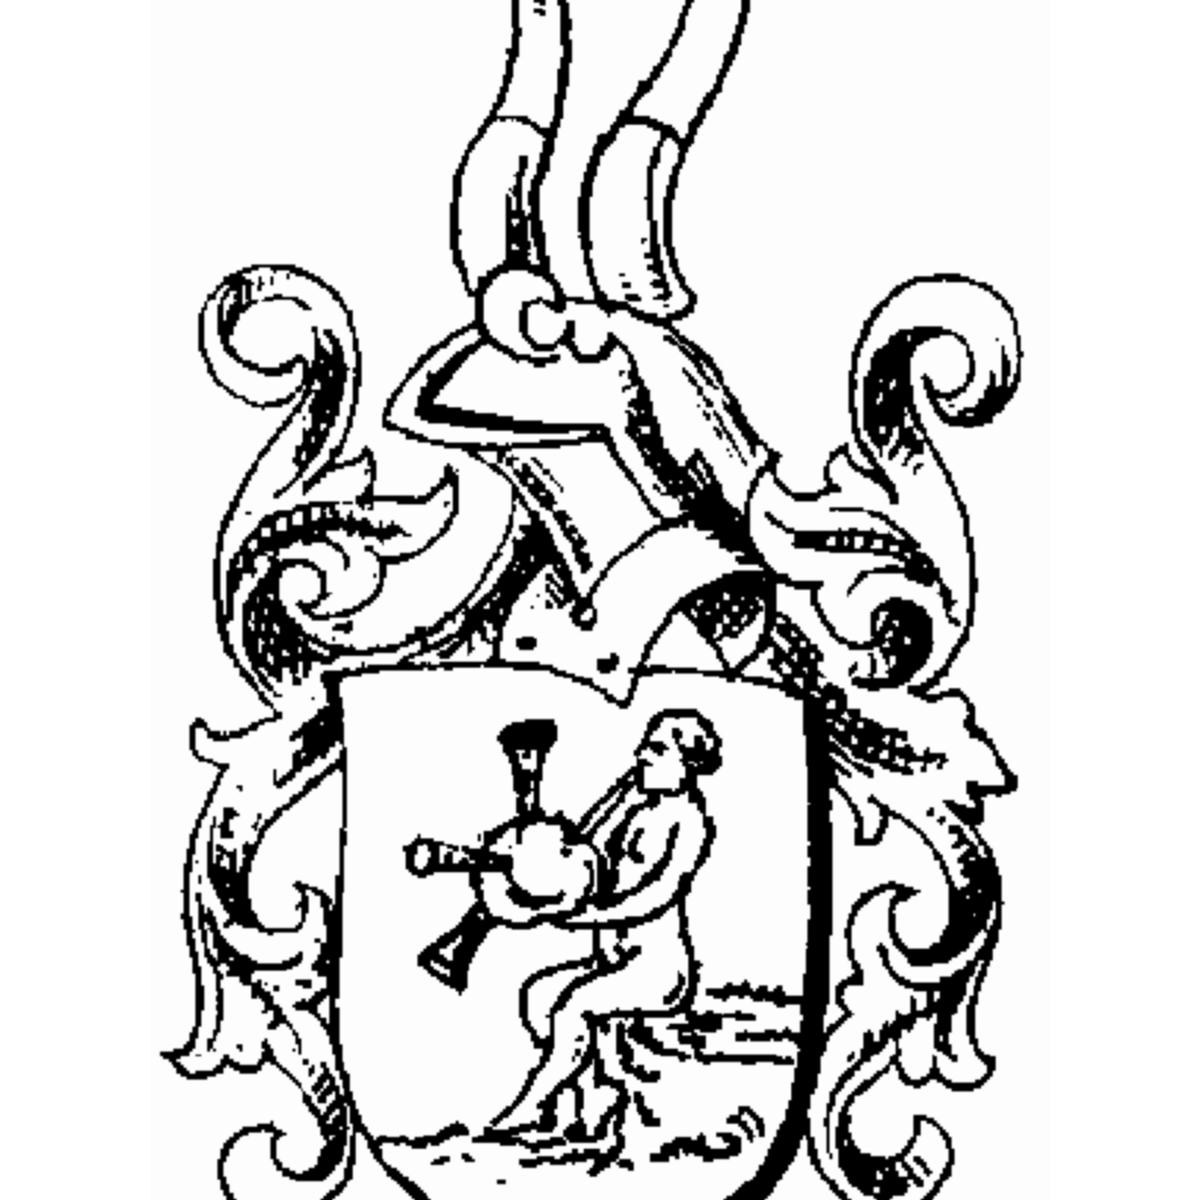 Wappen der Familie Spor